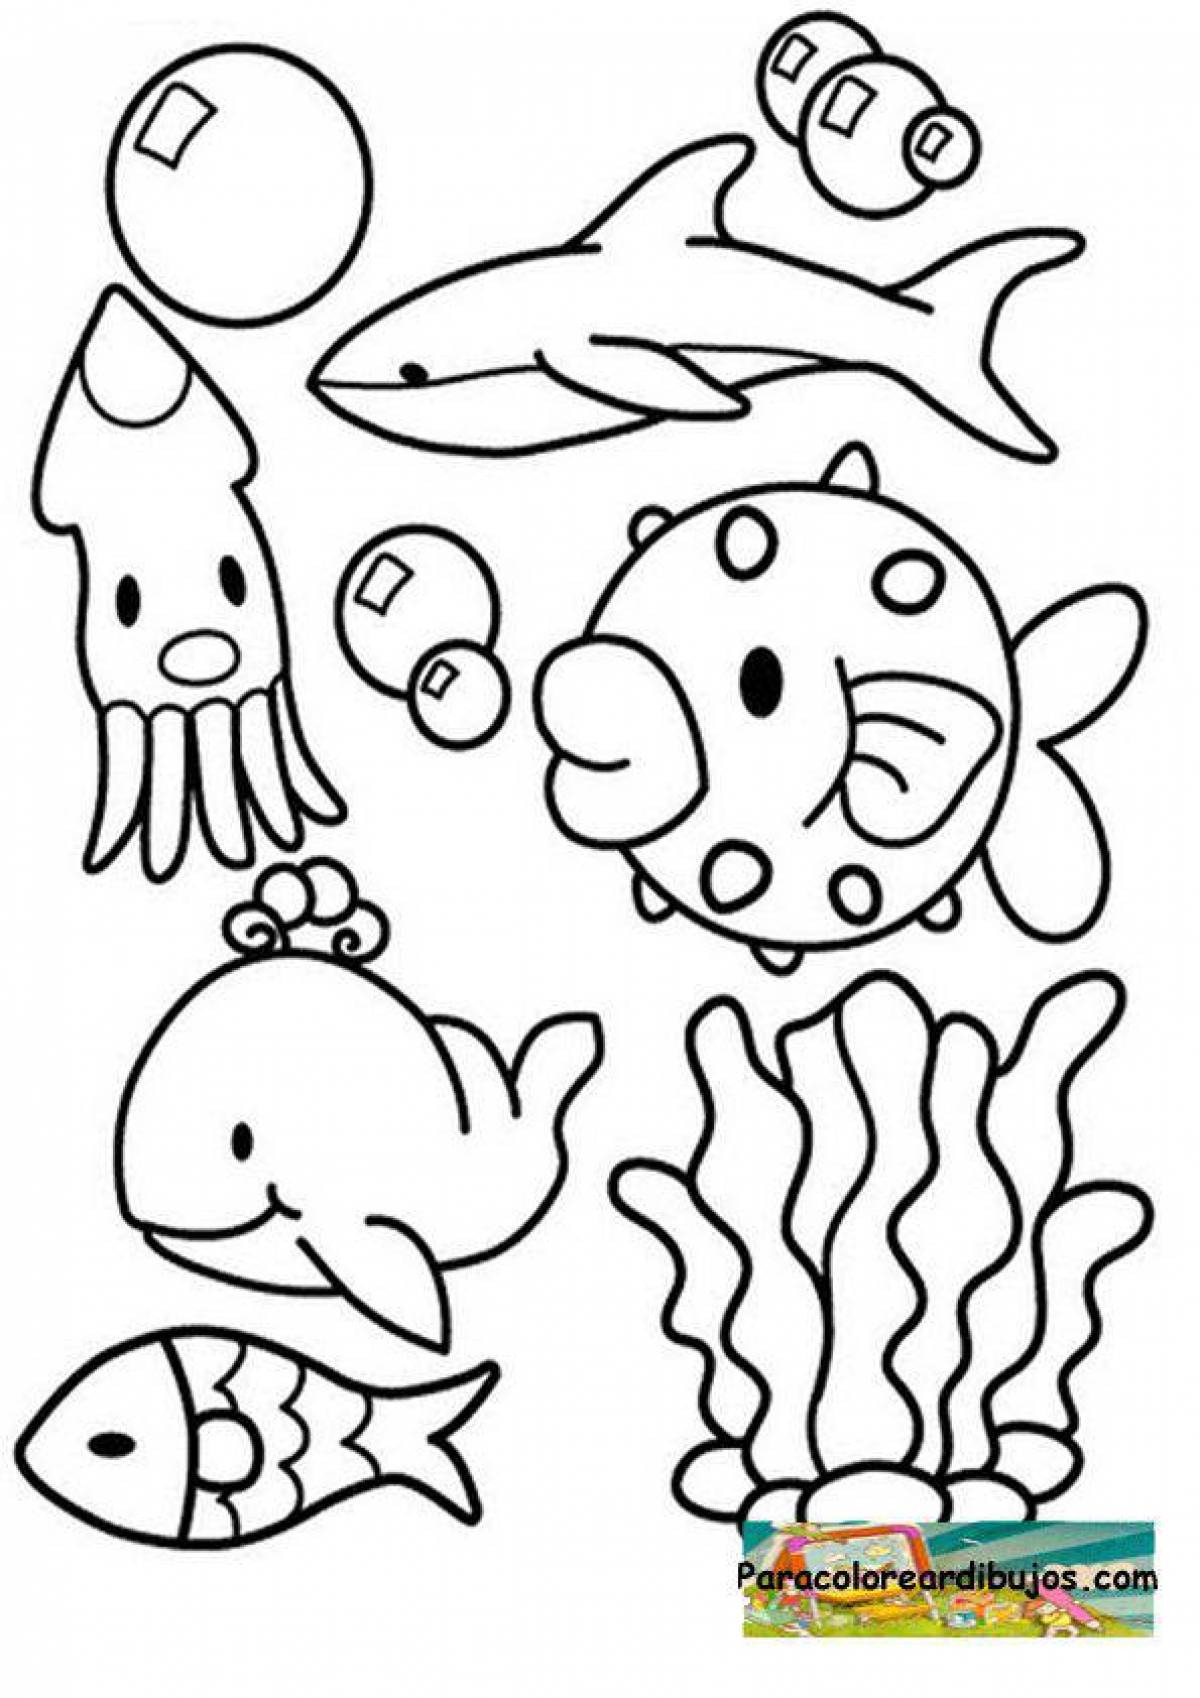 Cute sea creatures coloring book